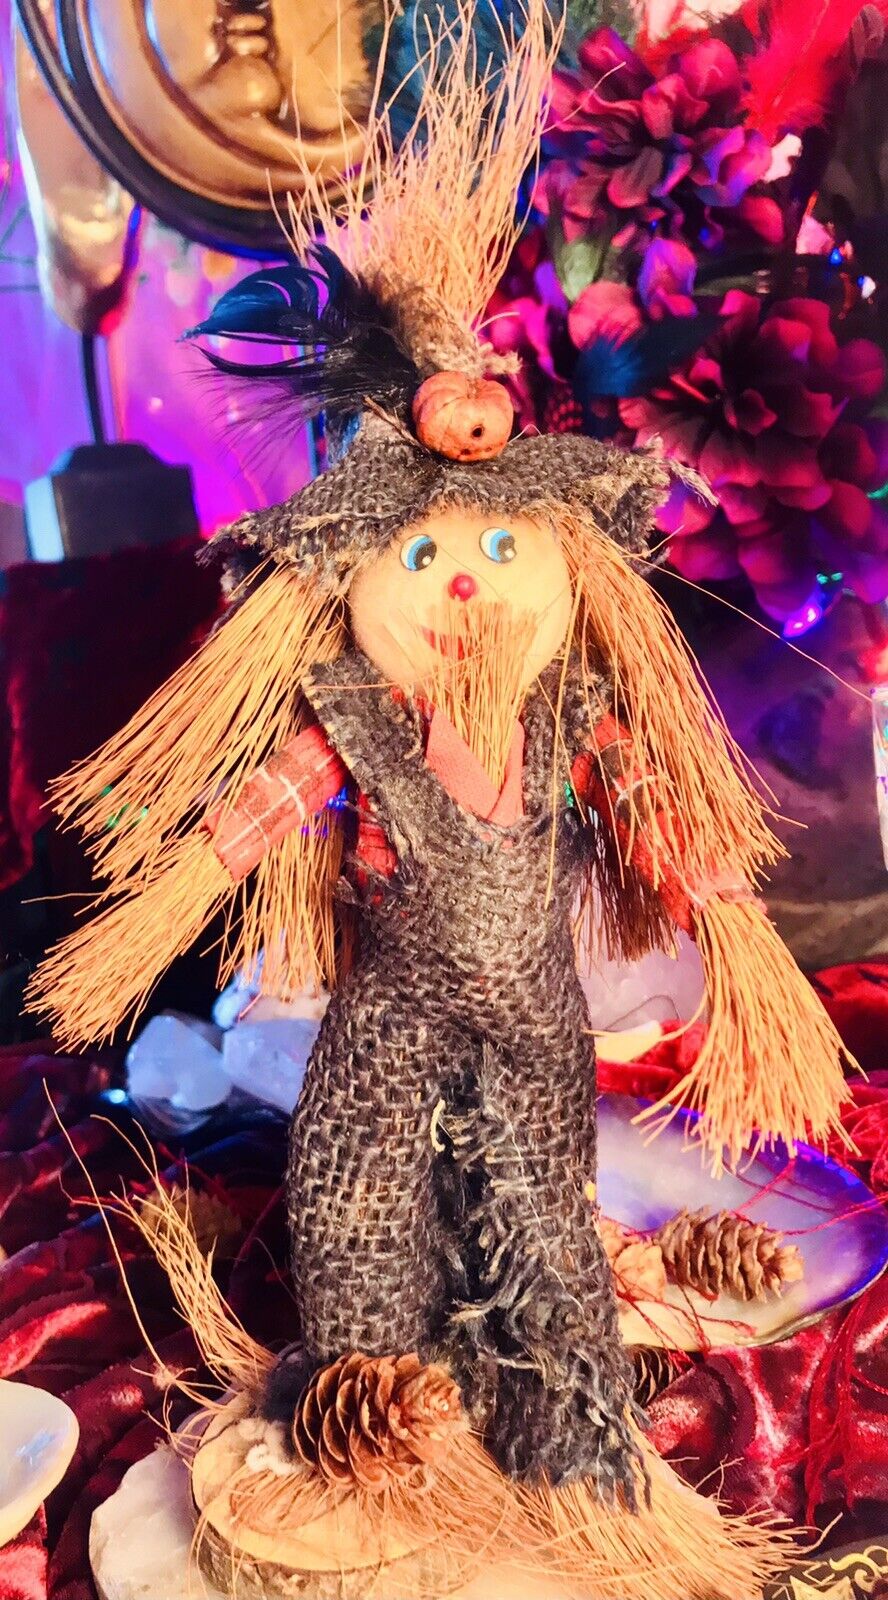 Meet Woody Bohemian Autunm Broom Scarecrow He is All Heart Sweet Vessel Doll